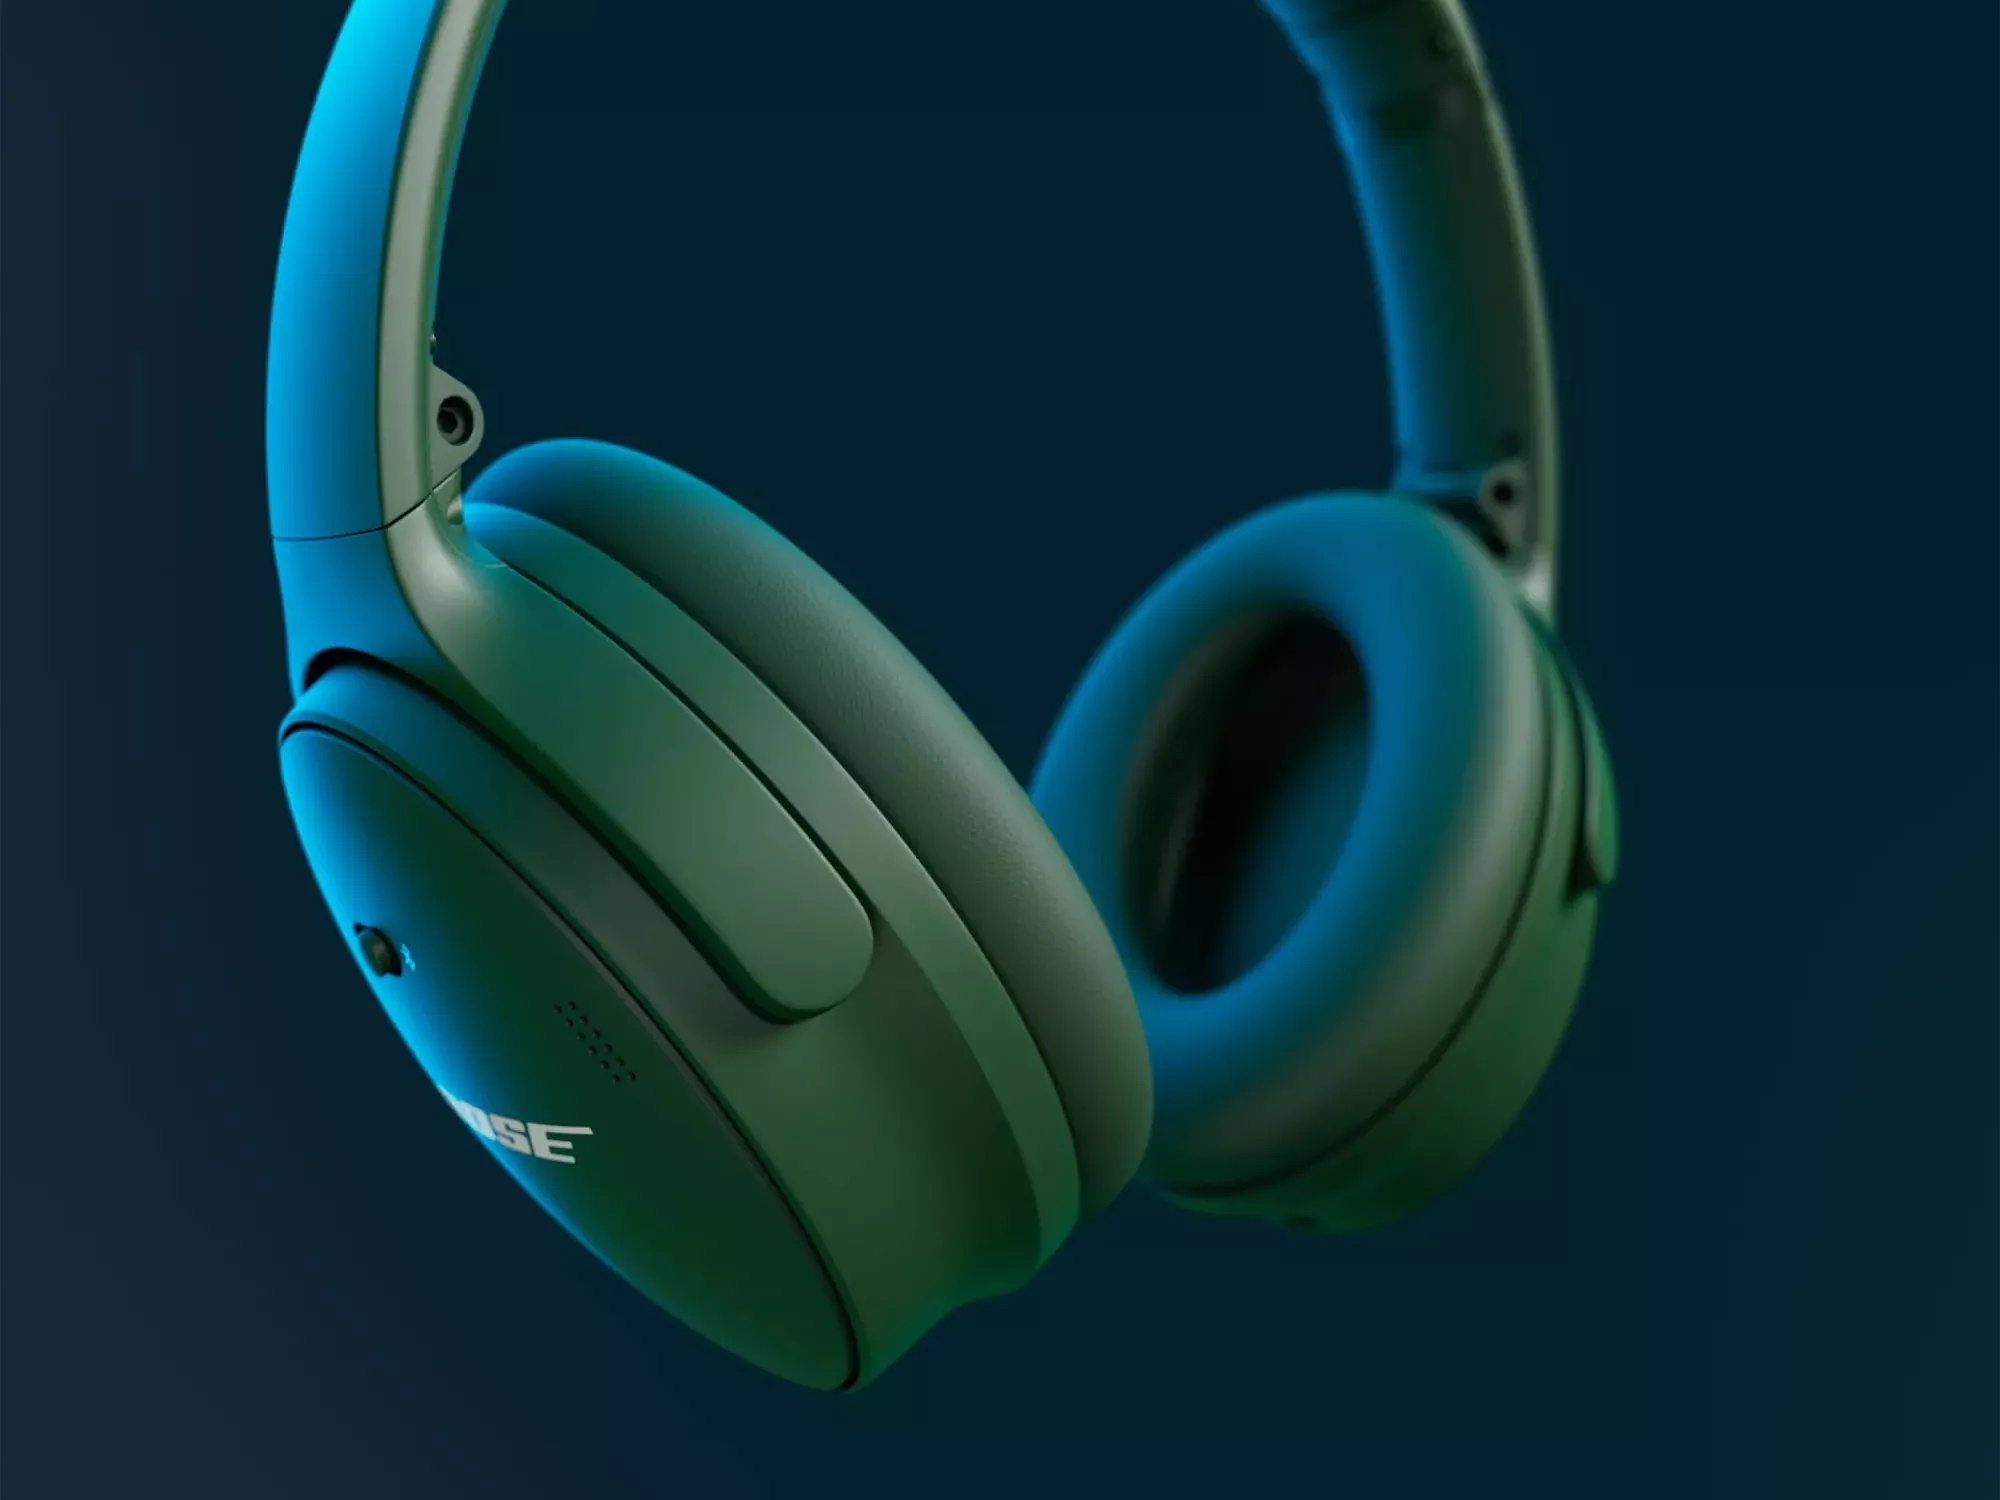 Bose QuietComfort Headphones have legendary noise cancellation